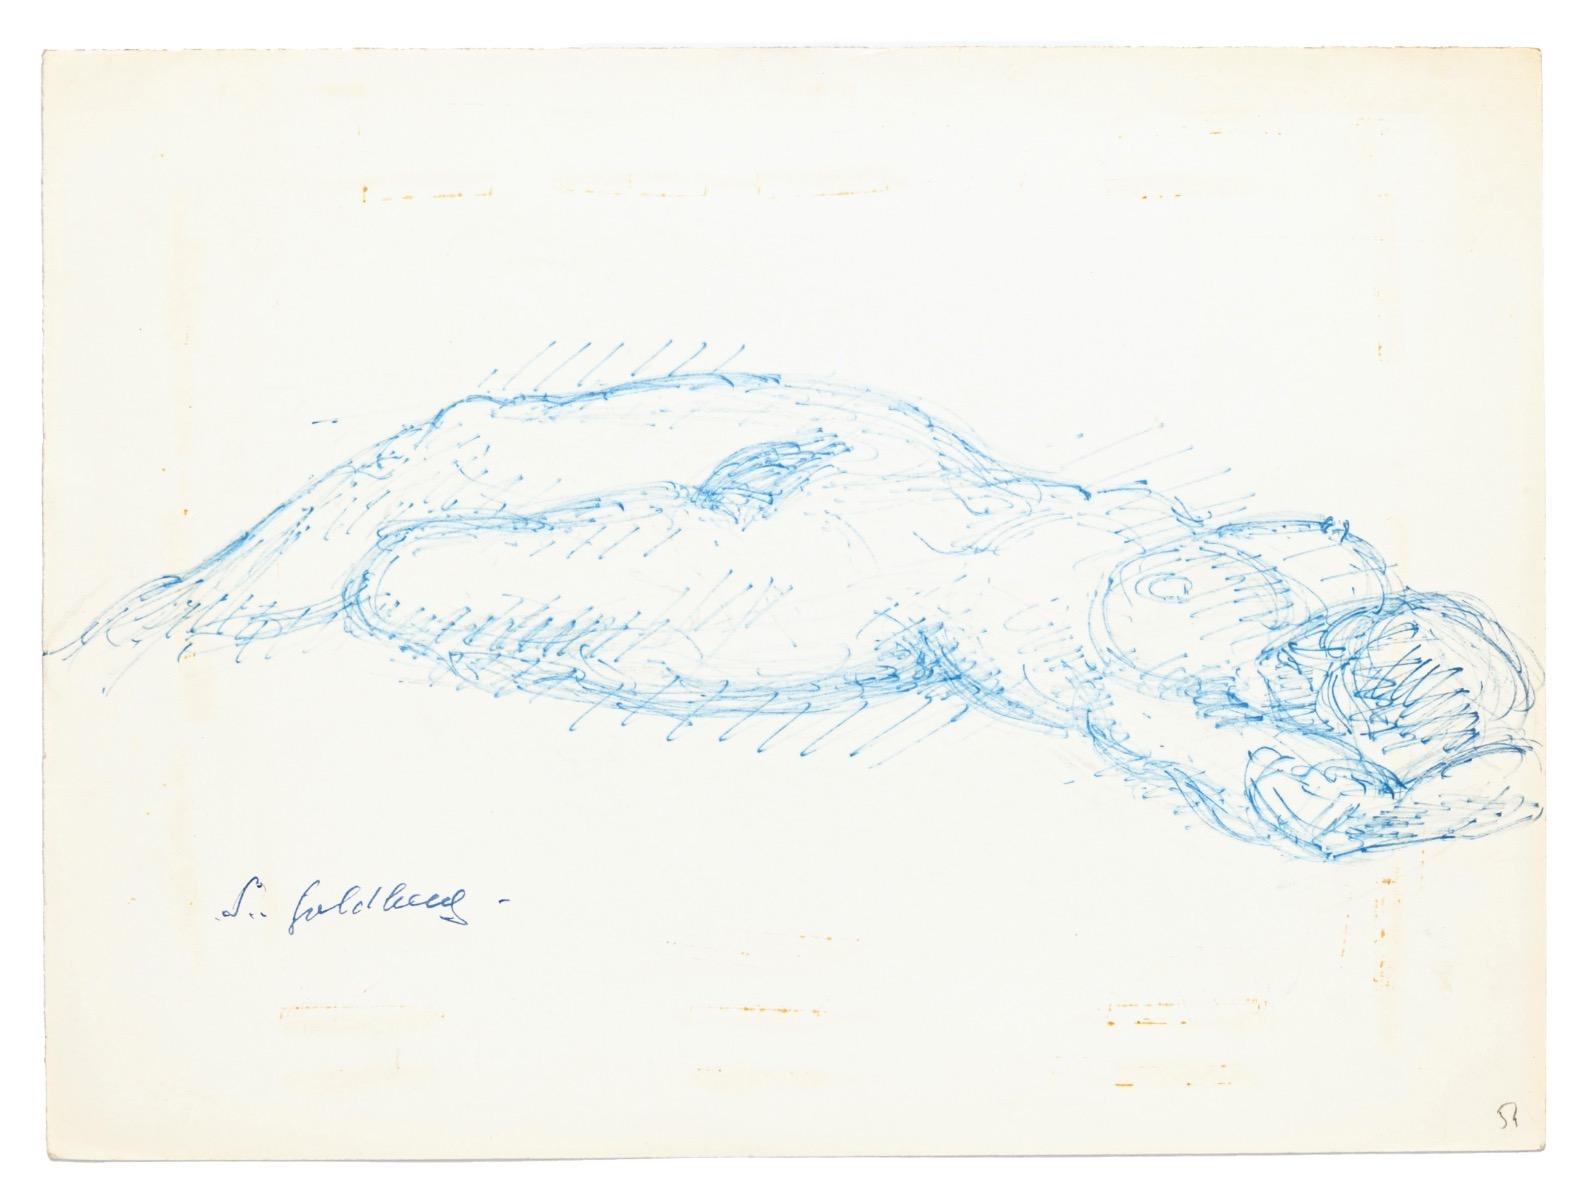 Simon Goldberg Figurative Art - Nude - Original Pen Drawing by S. Goldberg - Mid 20th Century